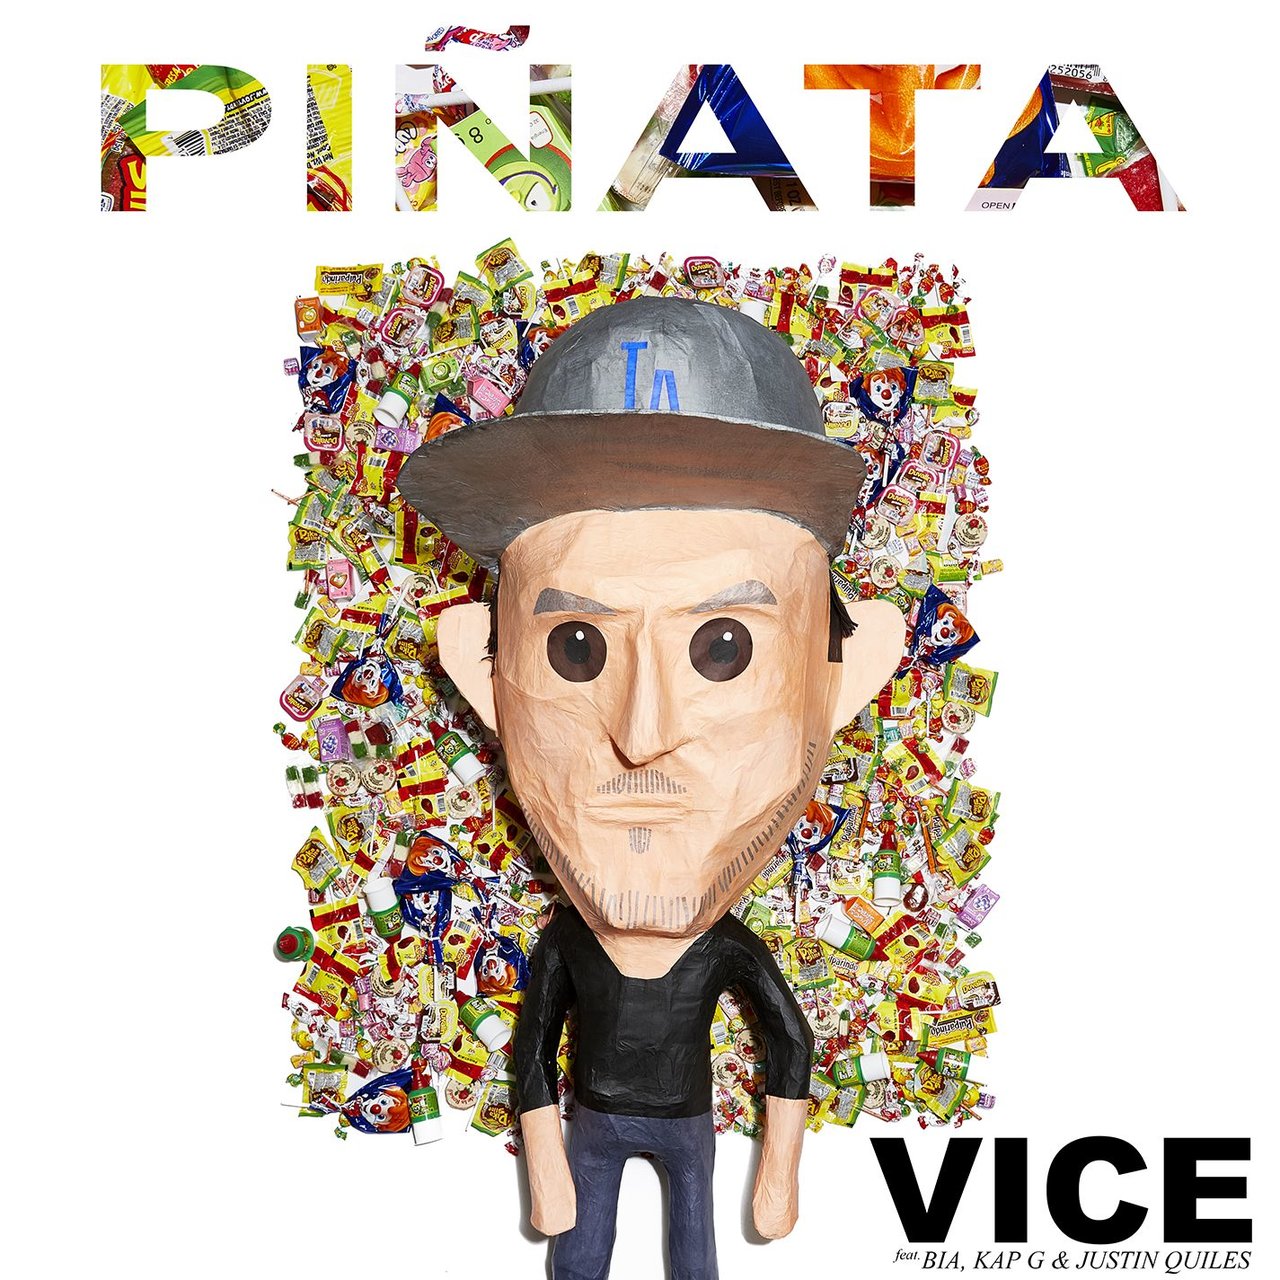 Vice featuring BIA, Kap G, & Justin Quiles — Piñata cover artwork